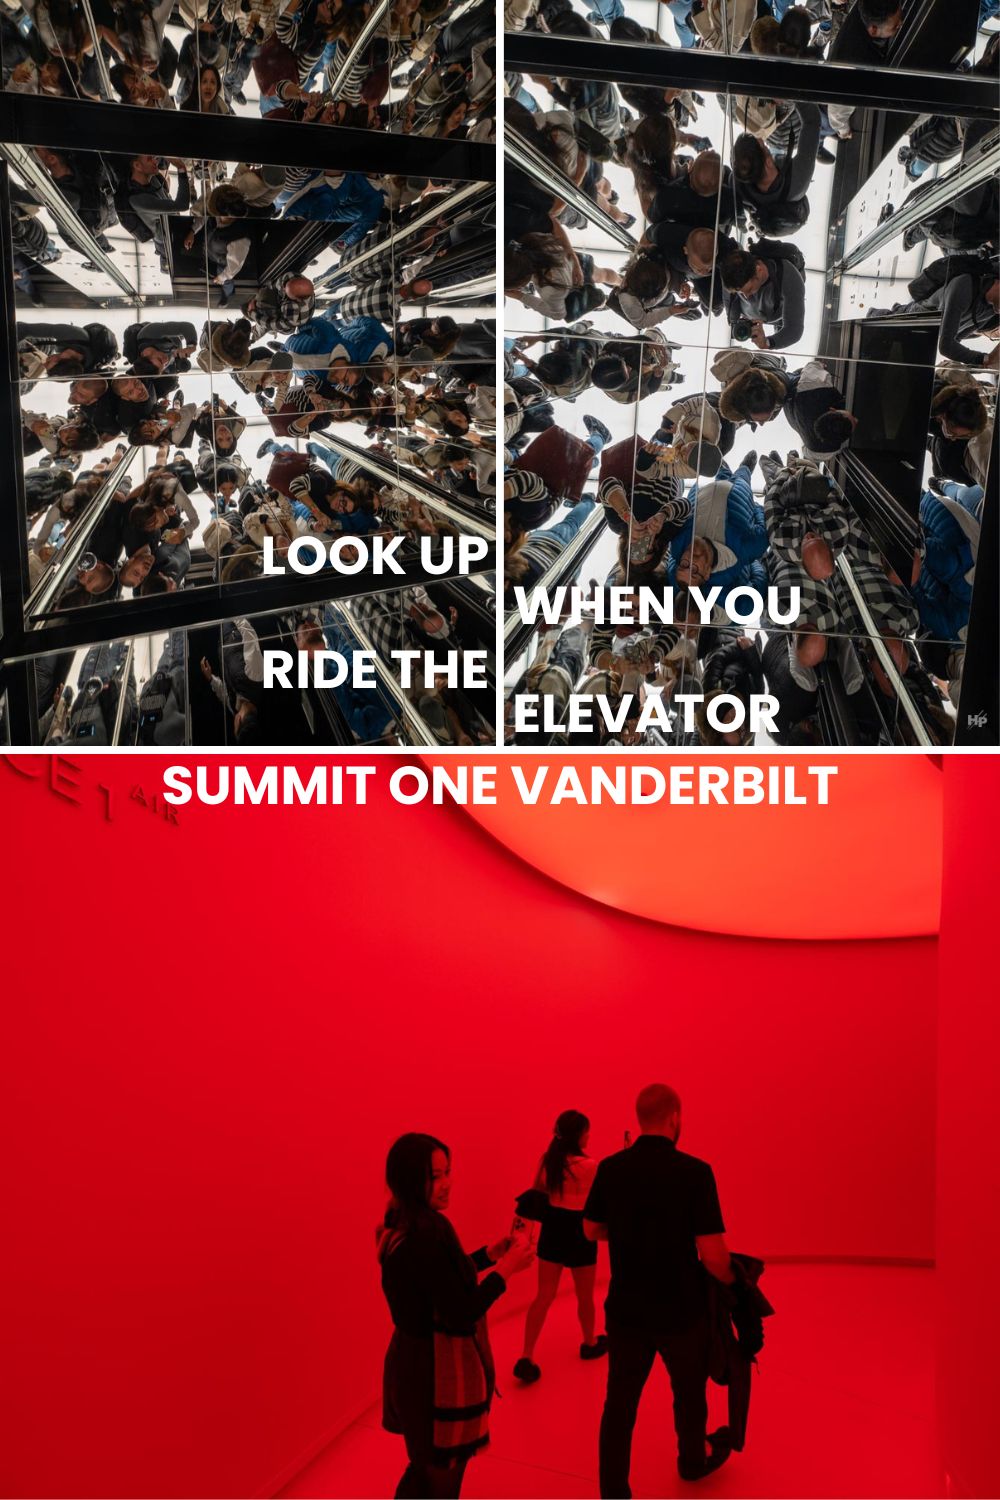 Elevator Summit One Vanderbilt NYC Guide for Visiting